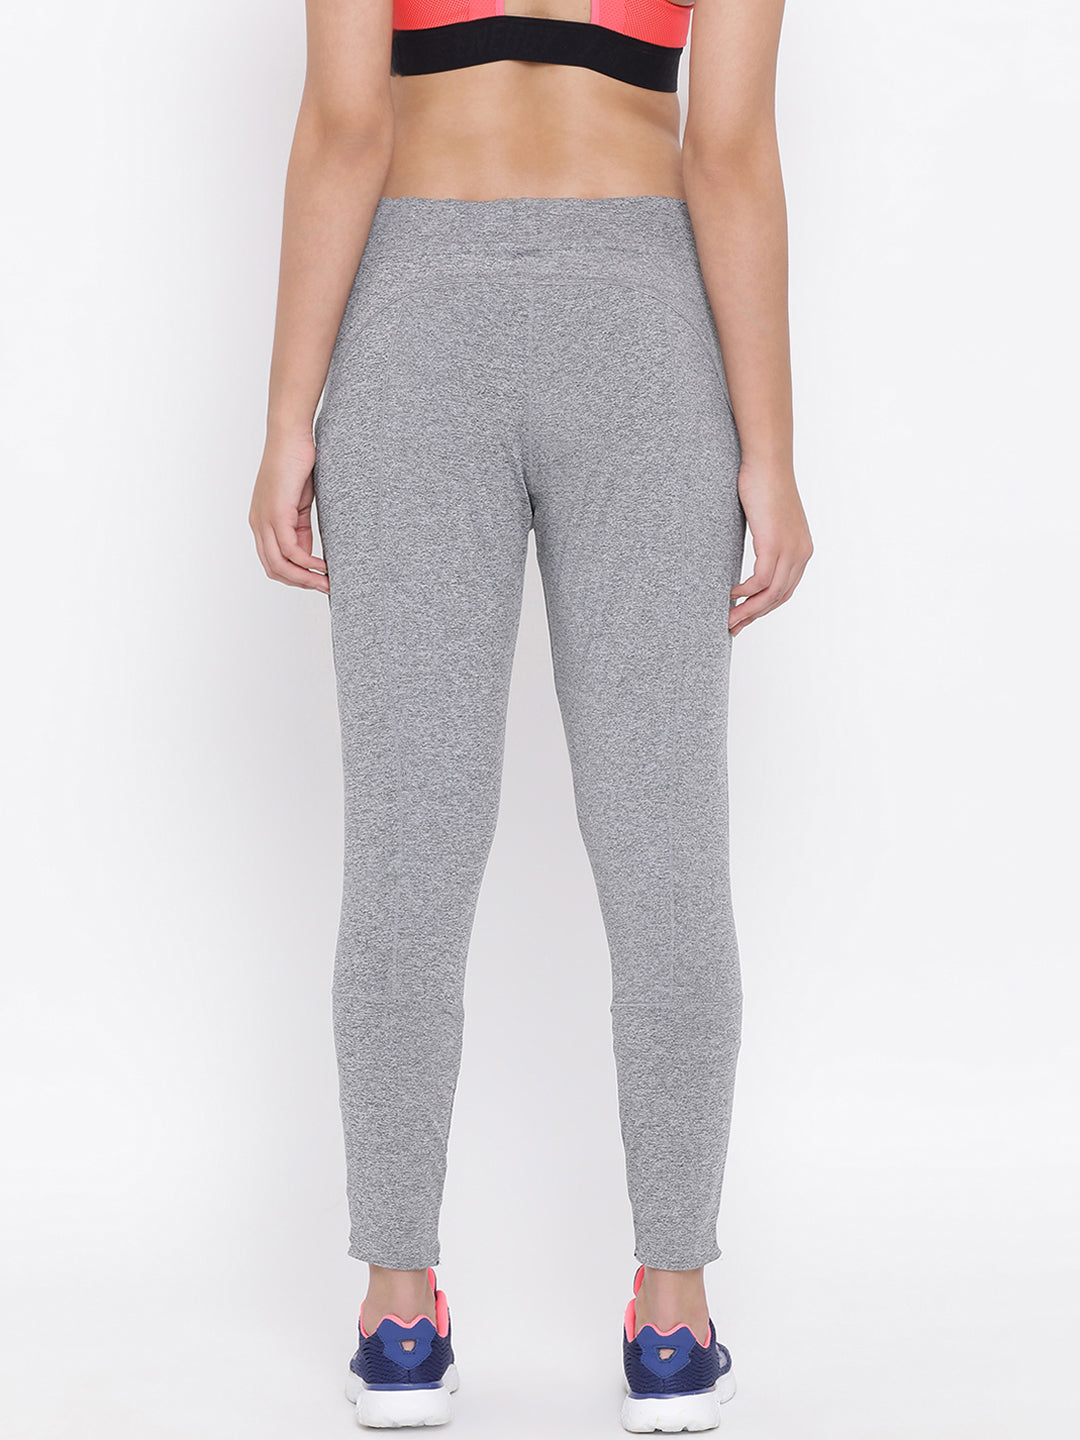 Grey Yoga Pants - Women Track Pants